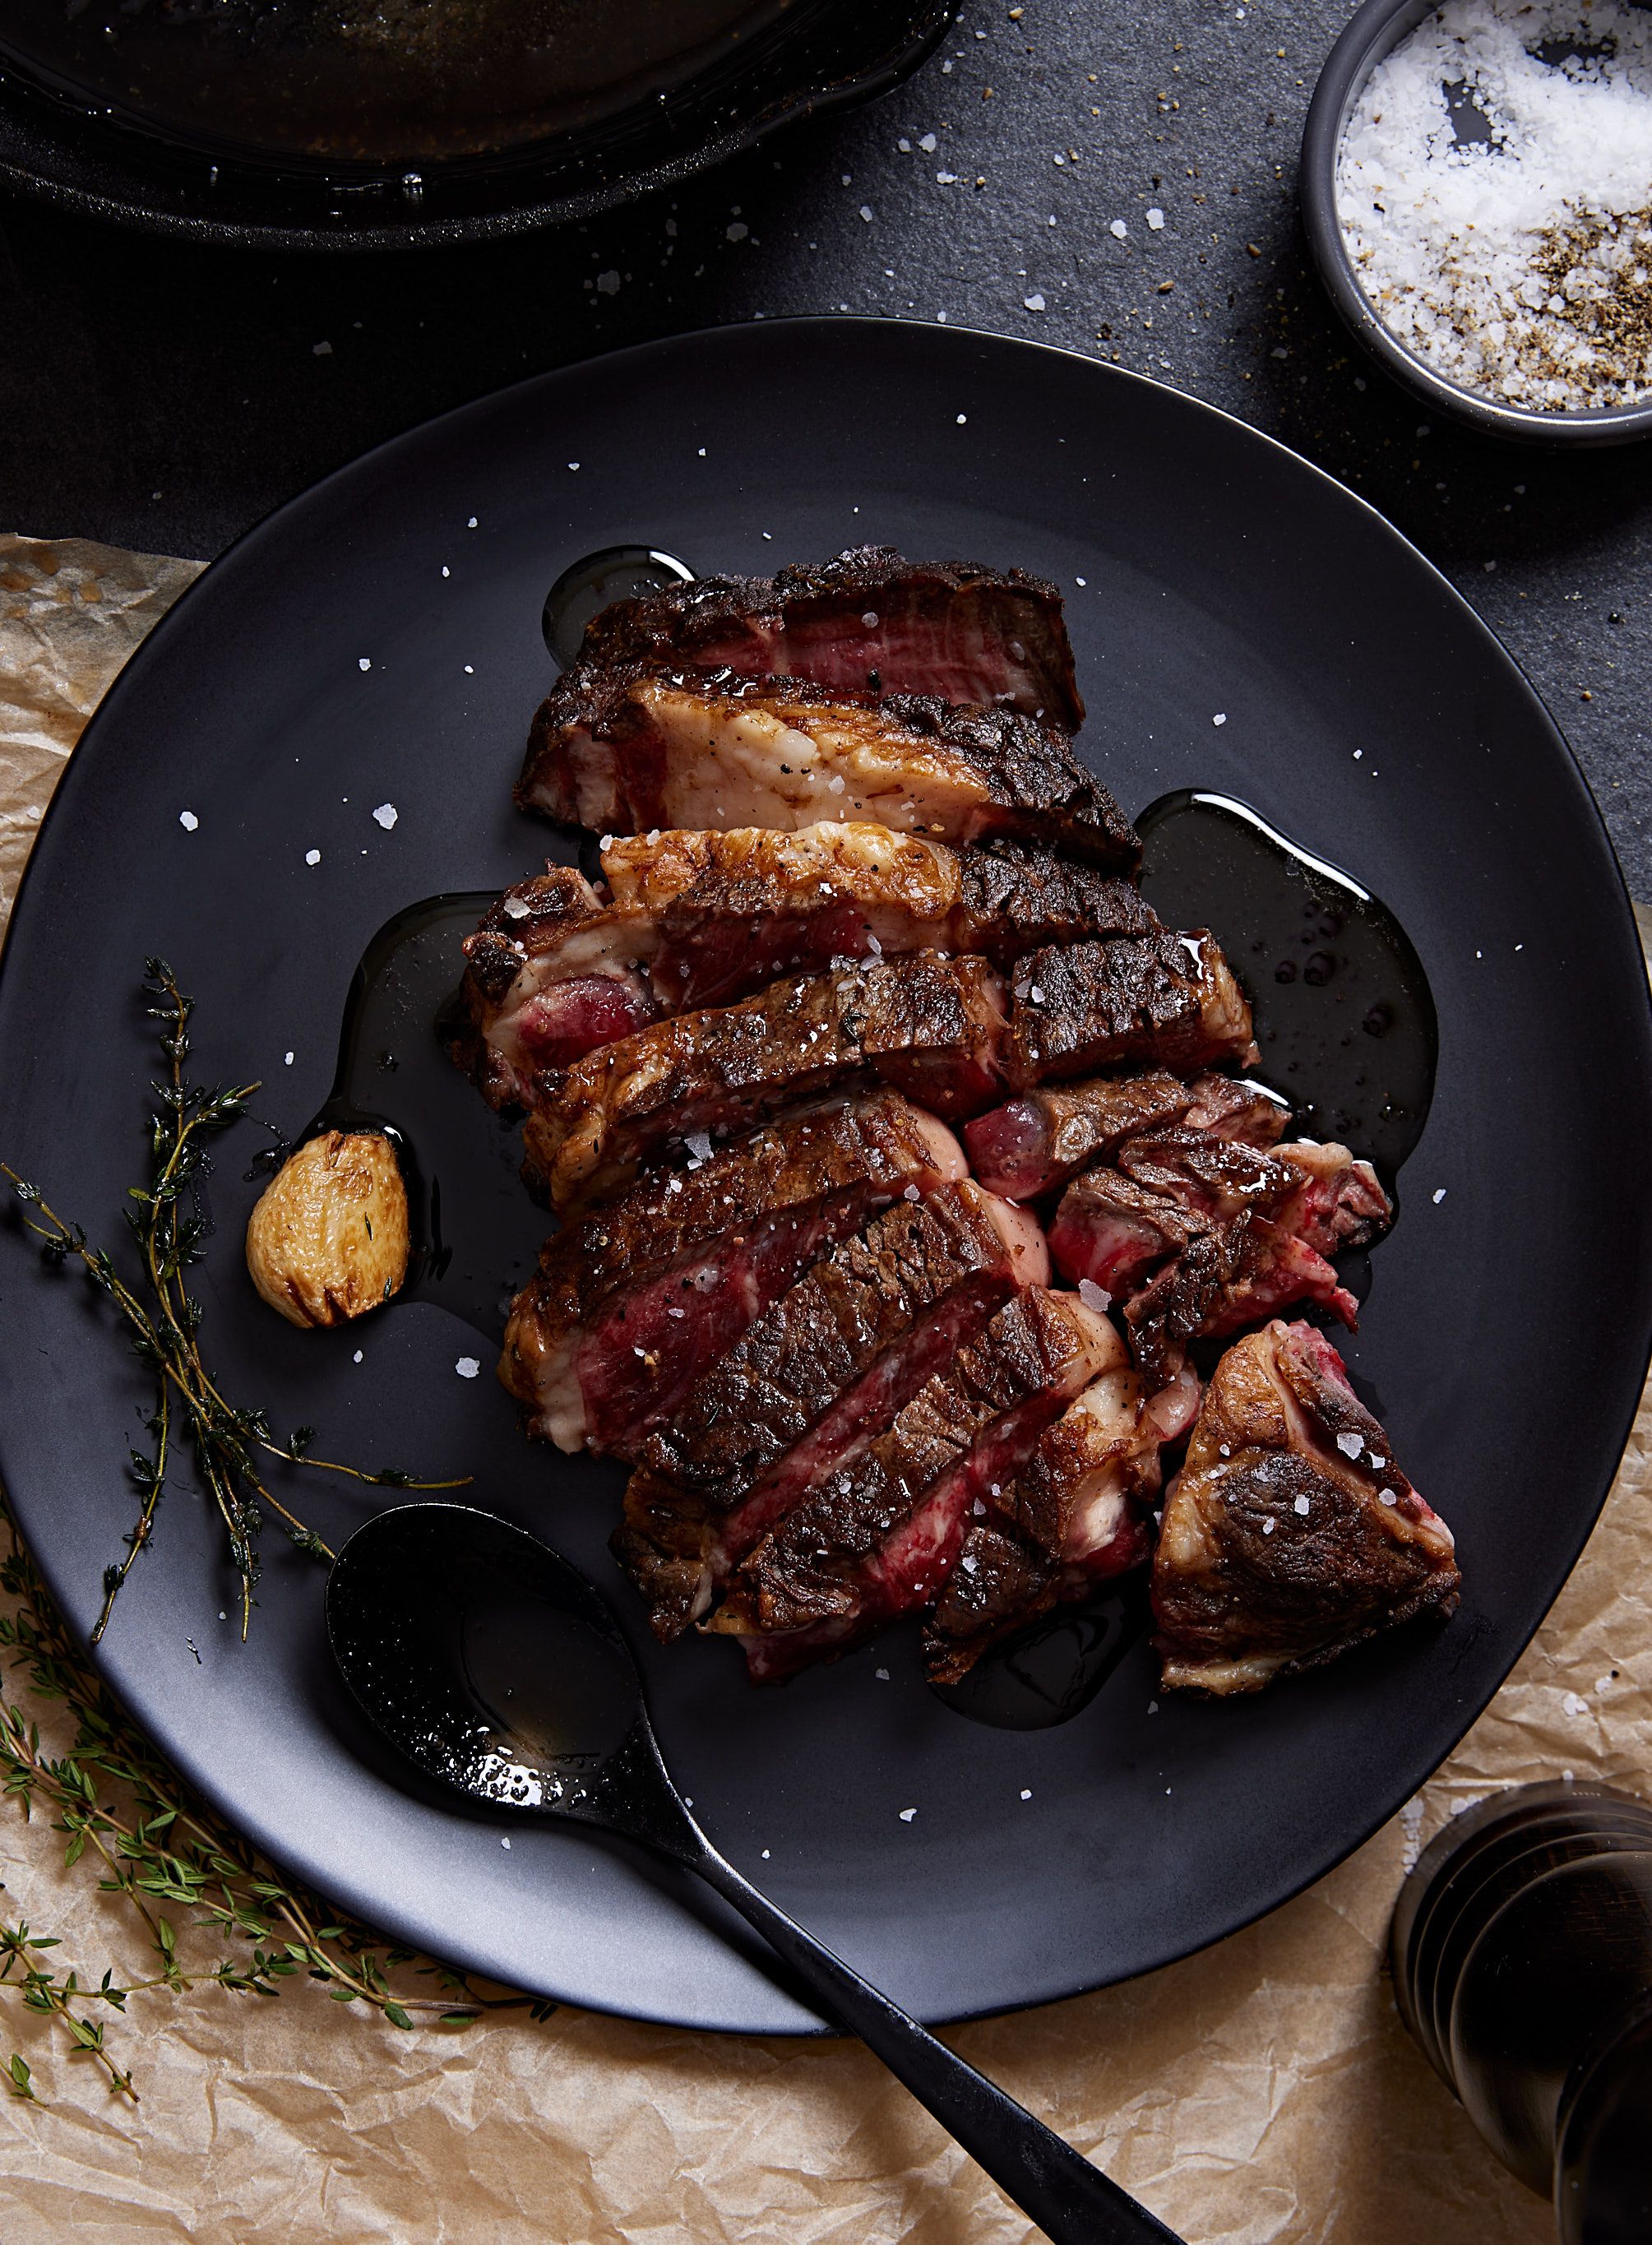 Cast-Iron Skillet Steak Recipe: How to Make It